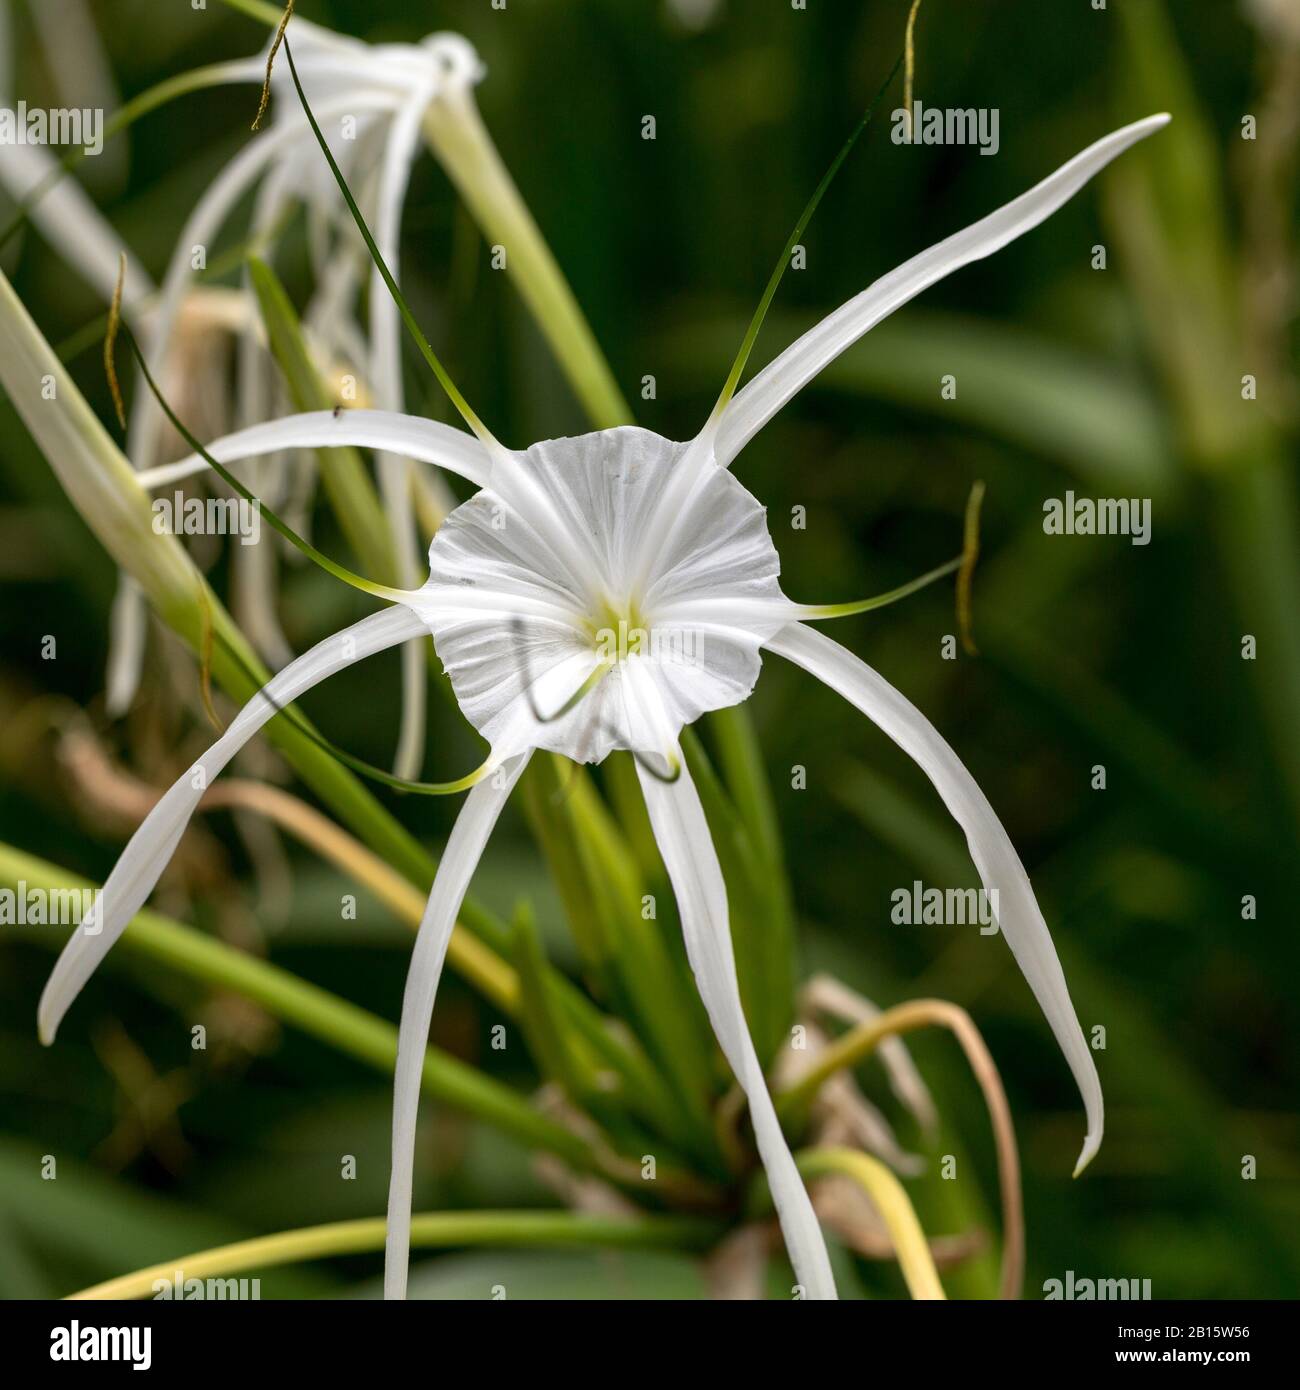 A Peruvian daffodil or beach spider lily, Hymenocallis littoralis, flowering ornamental bulbous plant Stock Photo